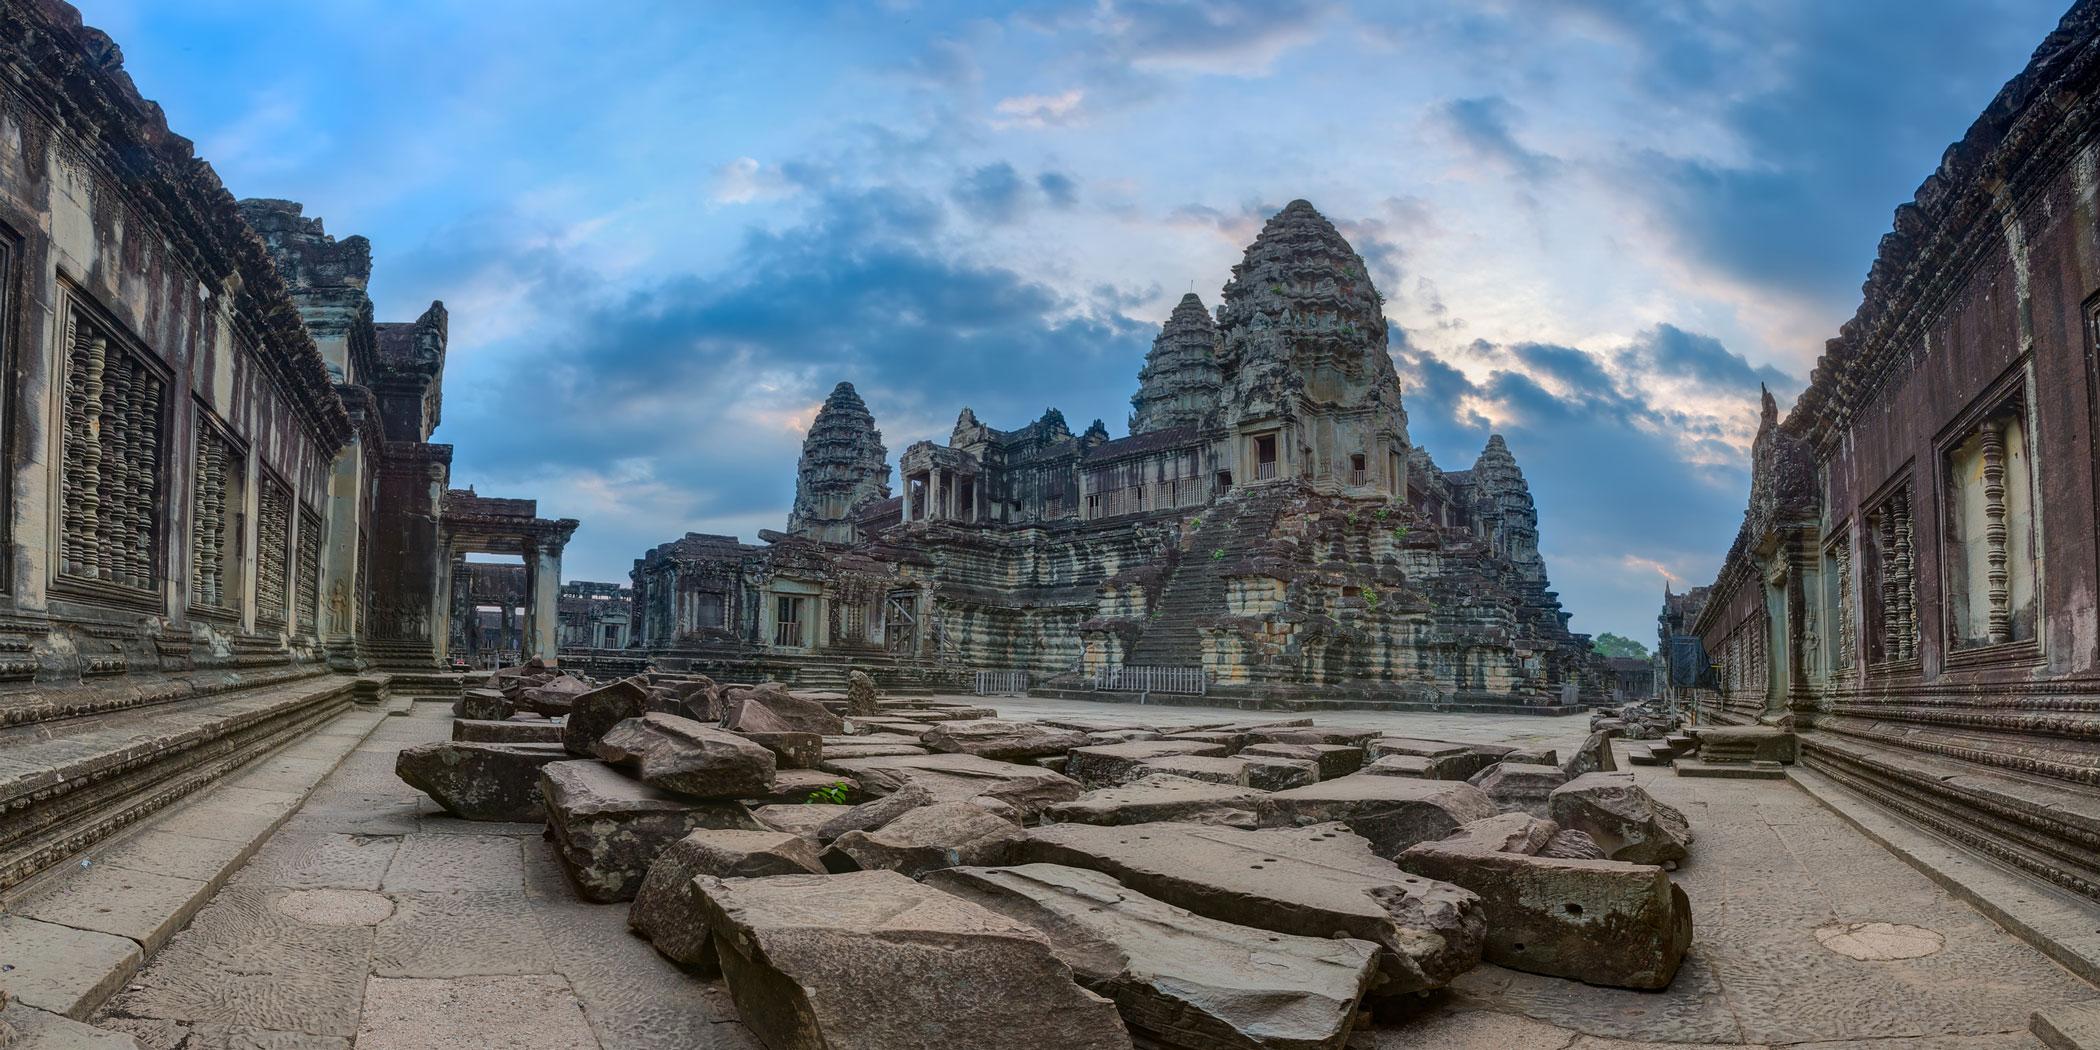 Angkor Wat Temple, Siem Reap, Cambodia. (Photo: Fotolia)